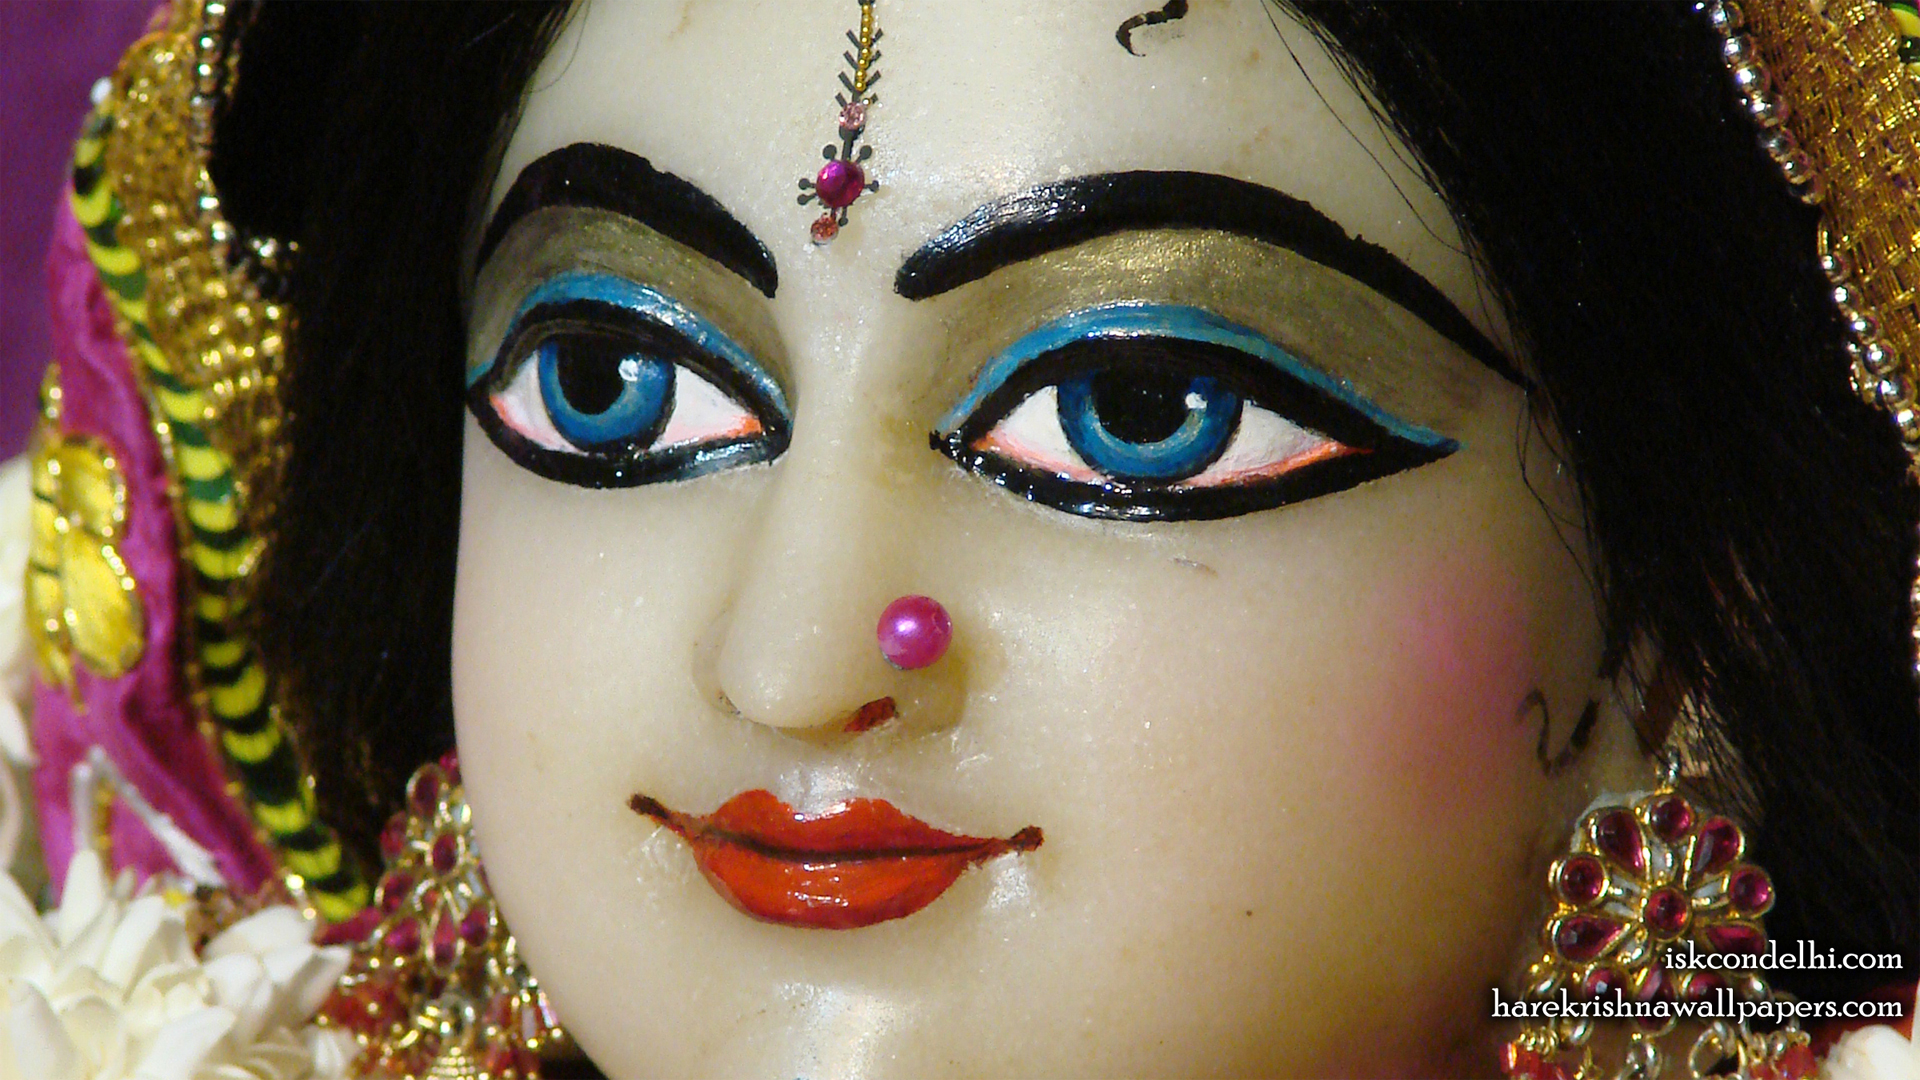 Sri Radha Close up Wallpaper (006) Size 1920x1080 Download